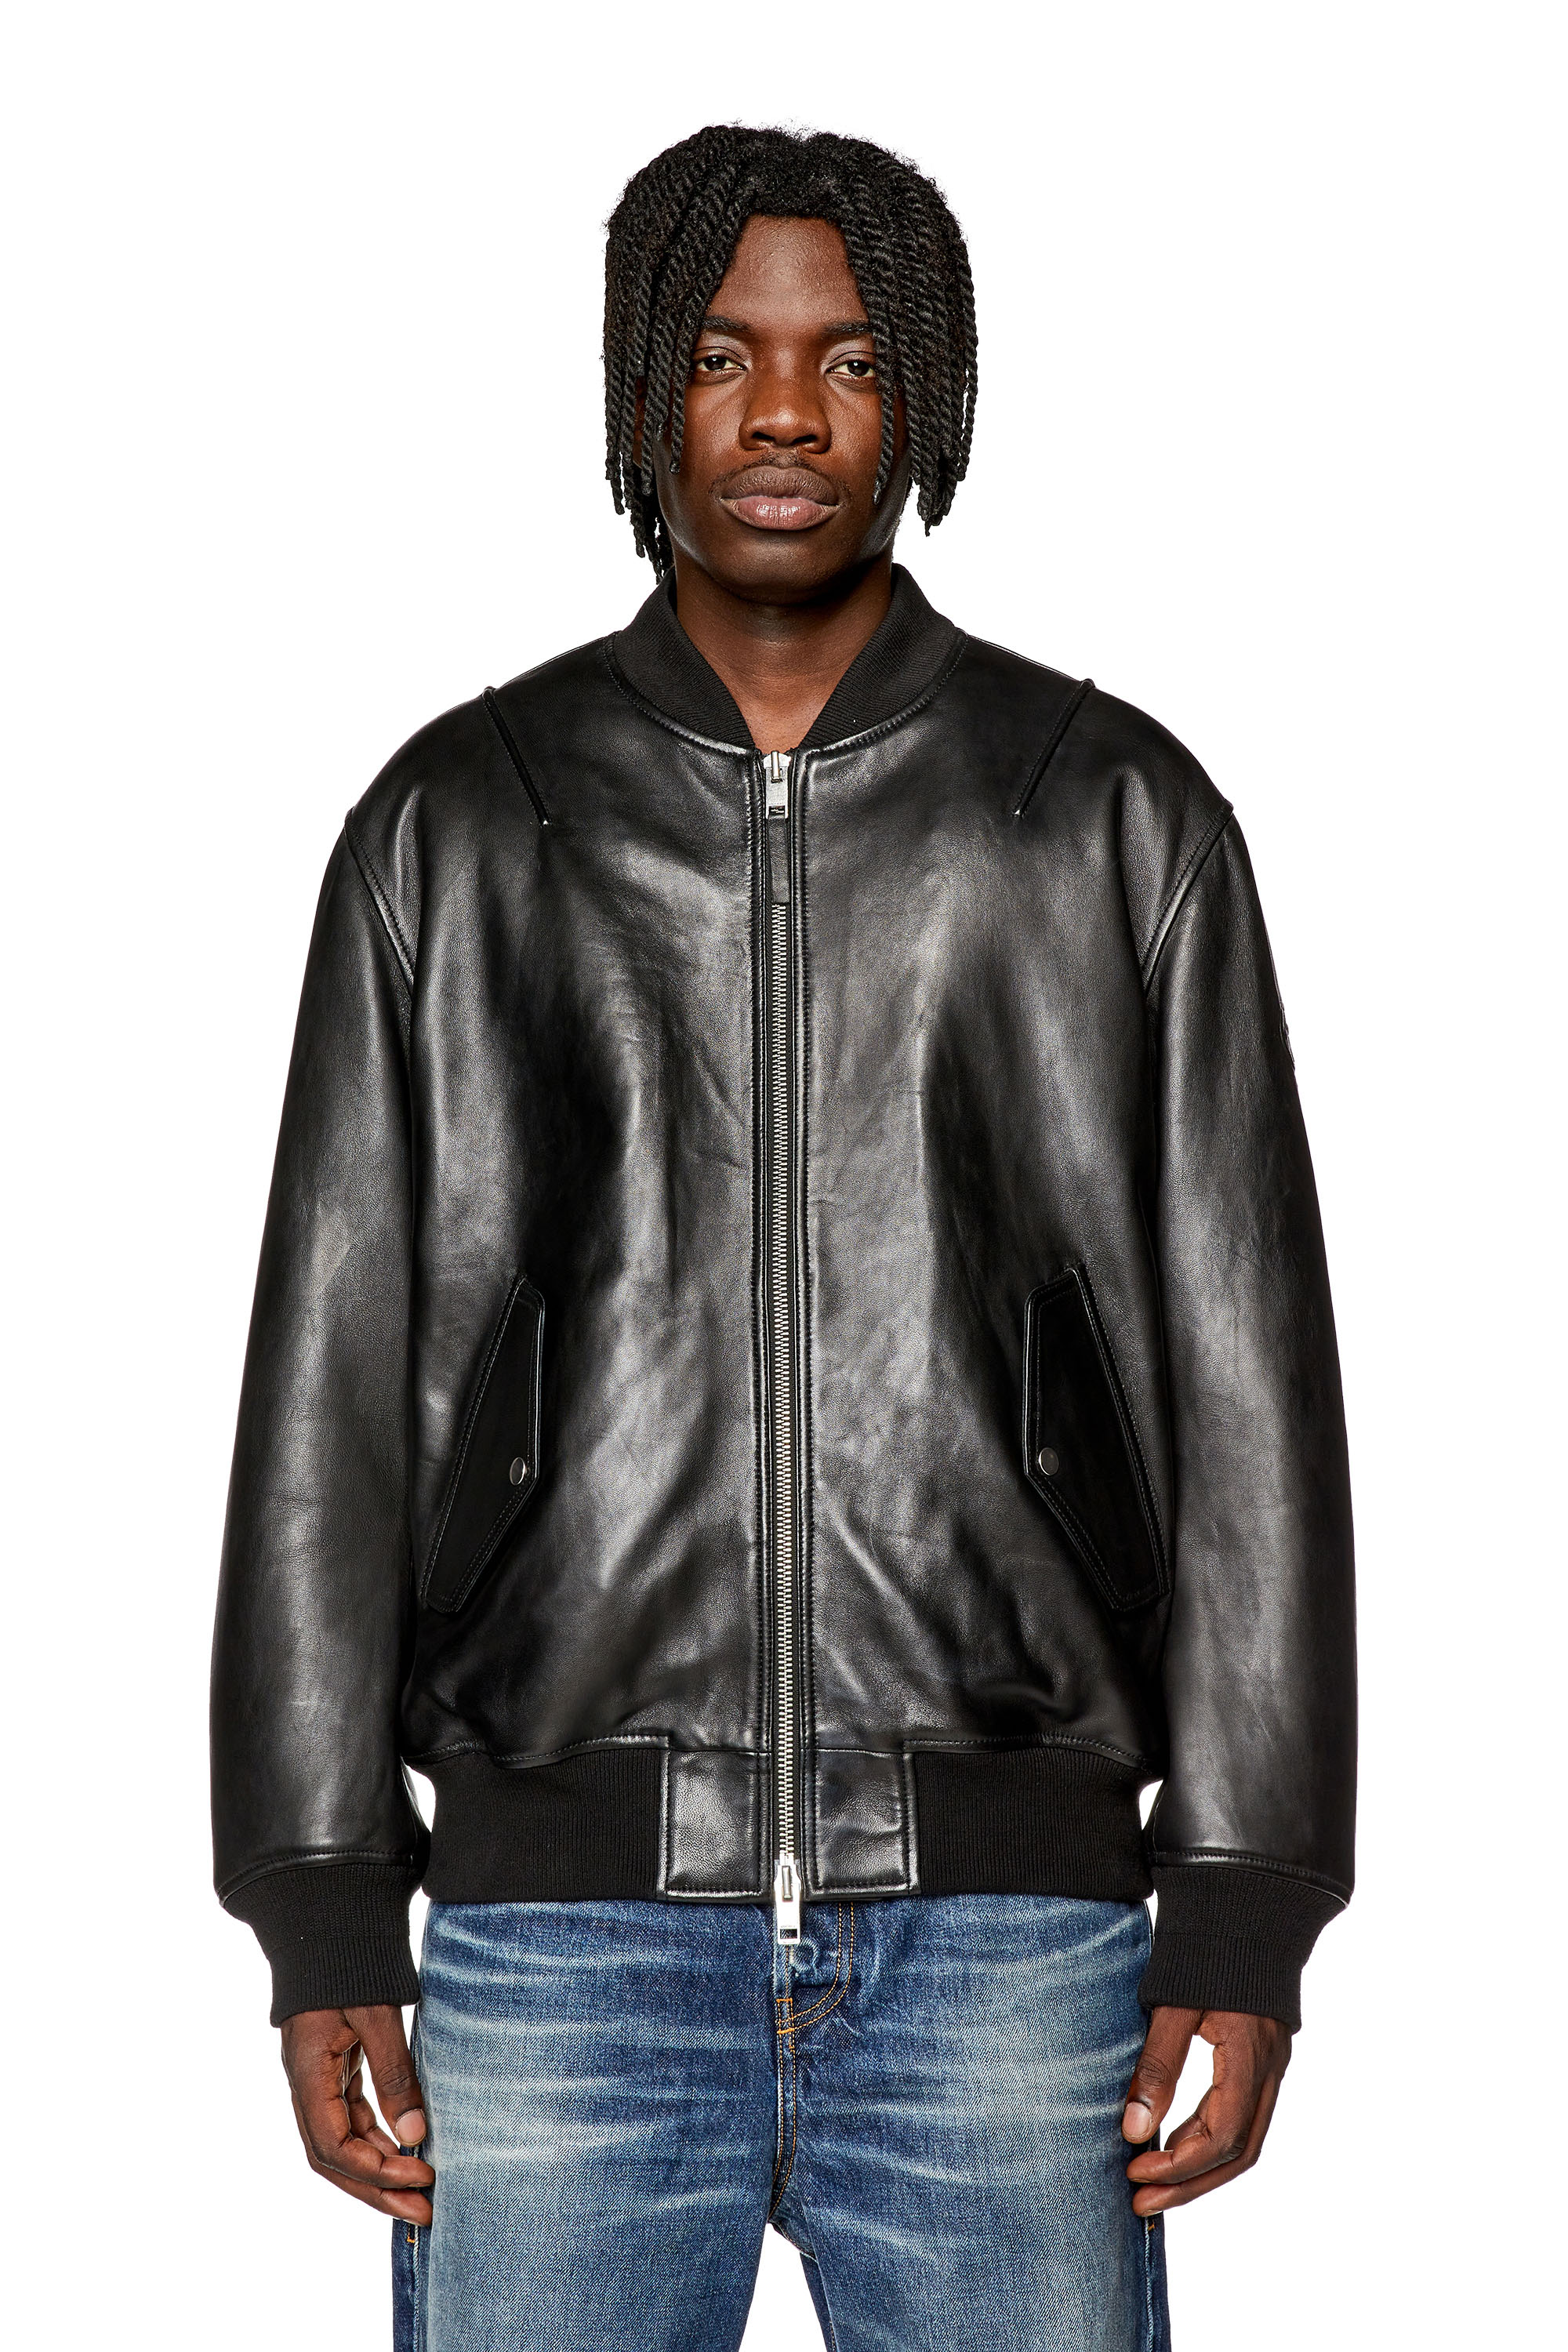 Diesel L-CALE - Leather jacket - black - Zalando.co.uk